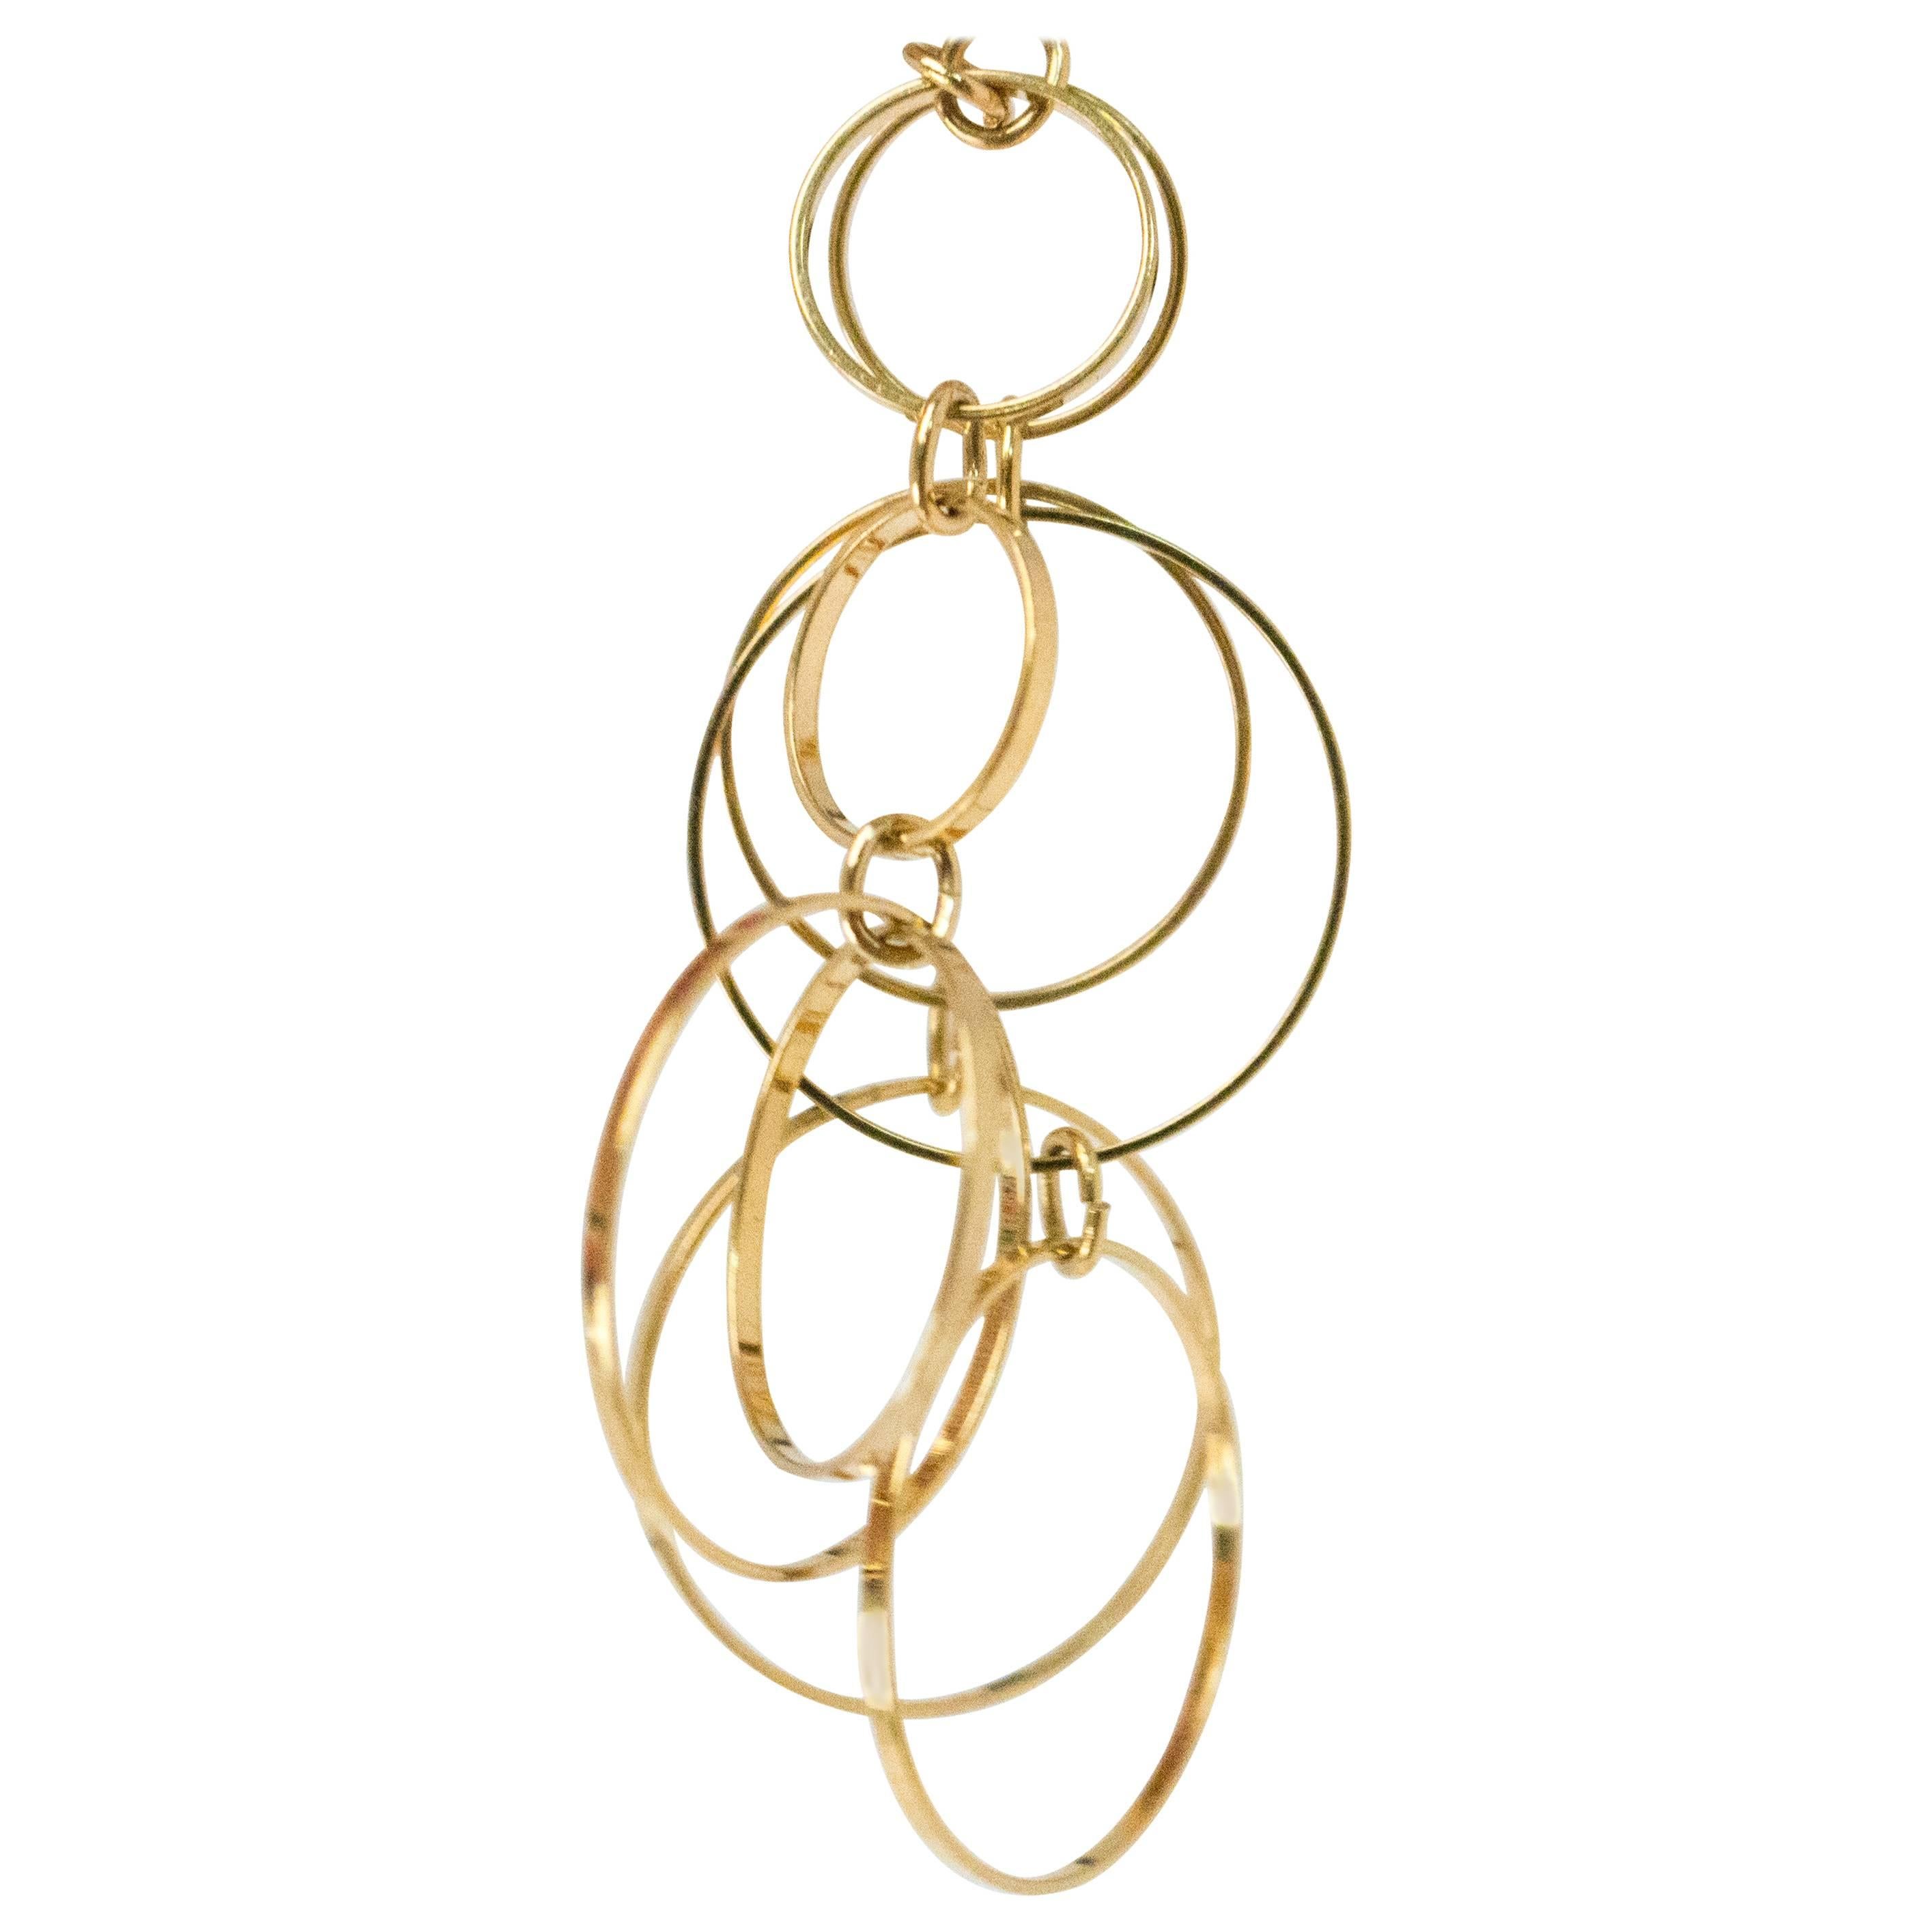 60s Gold Ring Chandelier Trifari Clip Earring